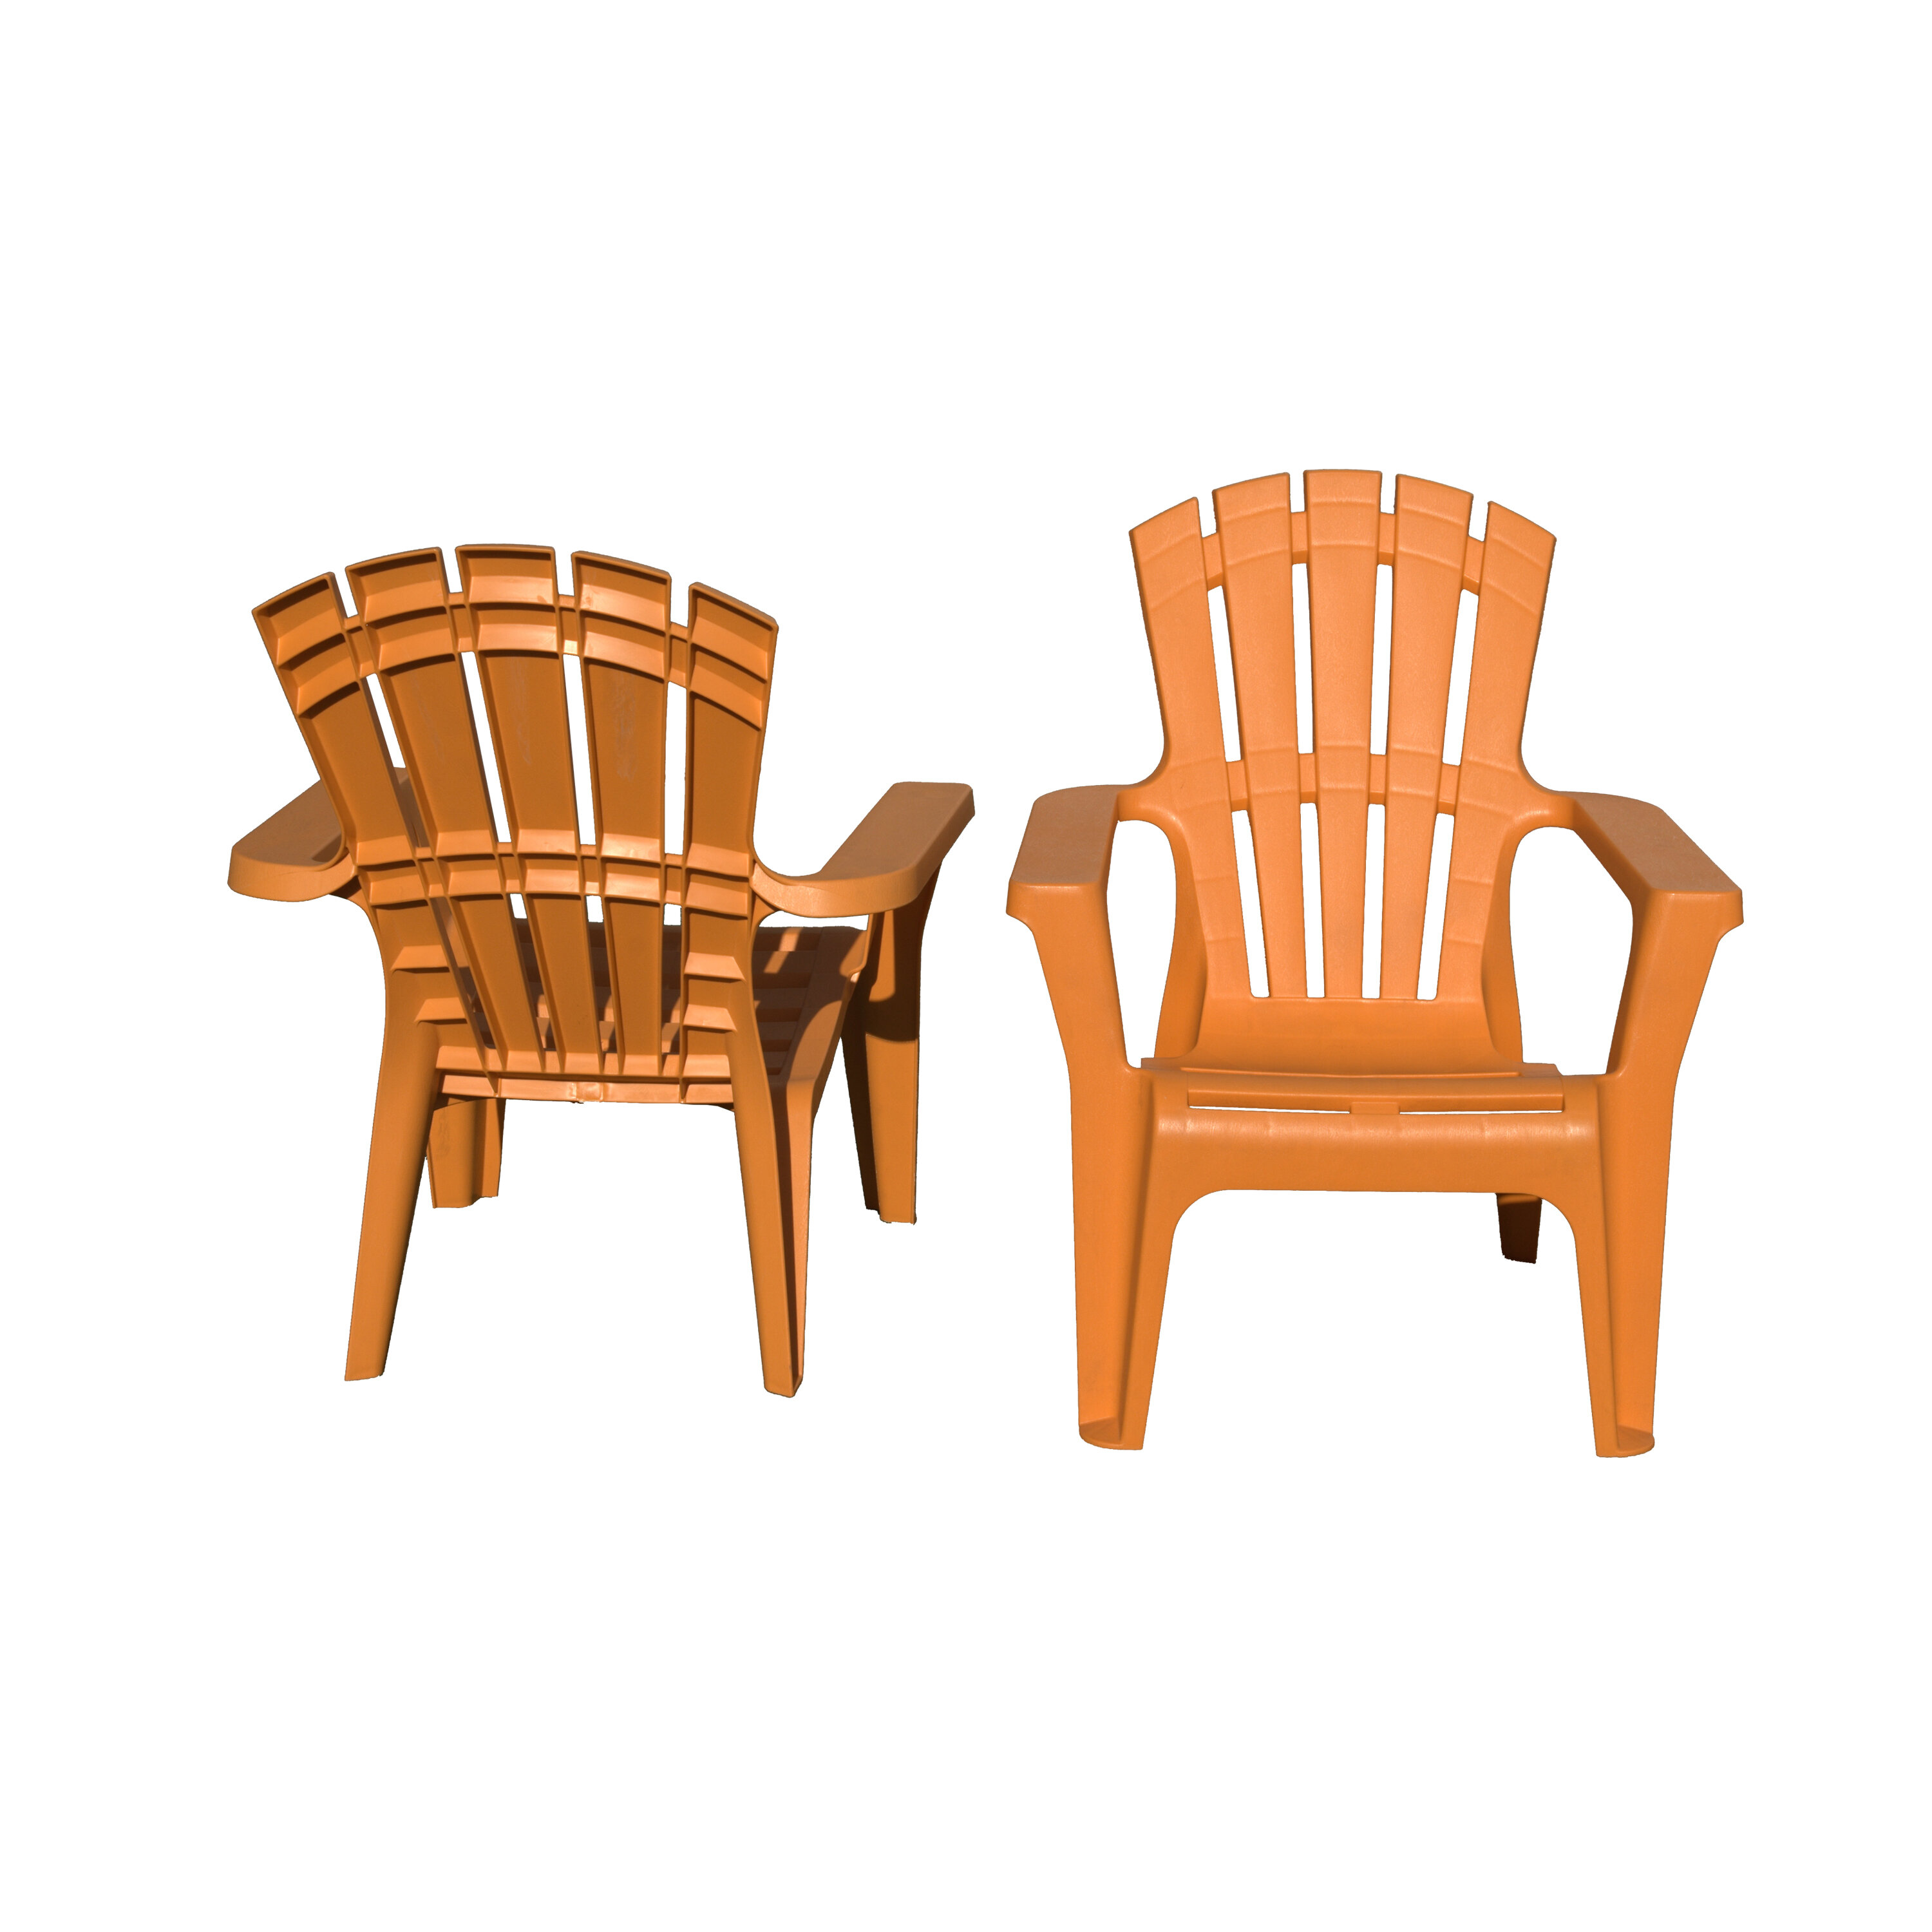 Martindale Plastic Adirondack Chair Reviews Joss Main